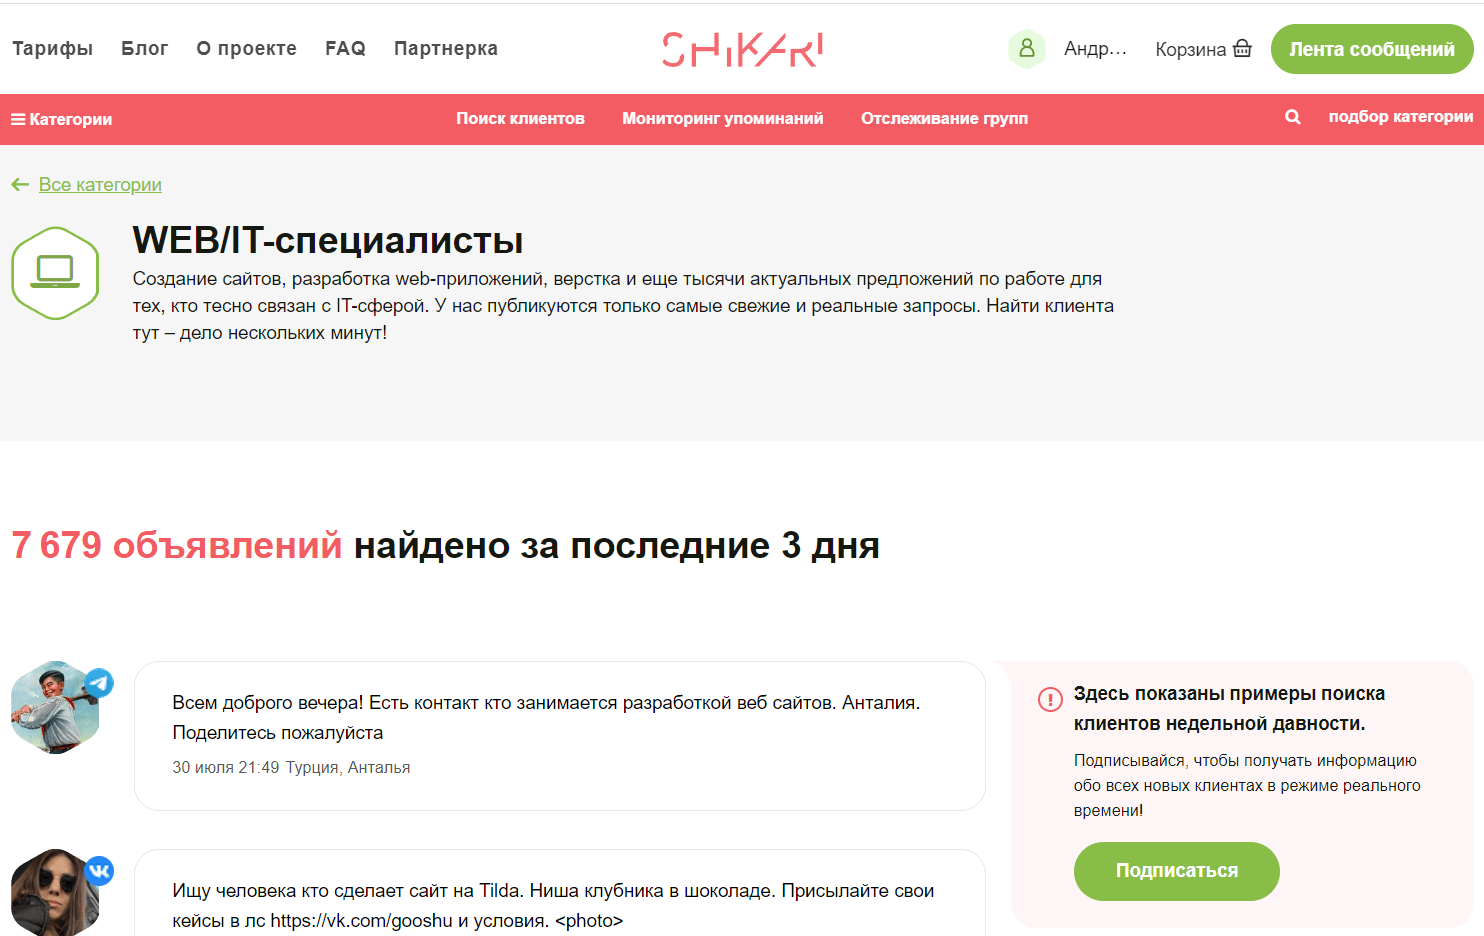 Заказы на разработку сайтов. Портал Shikari.